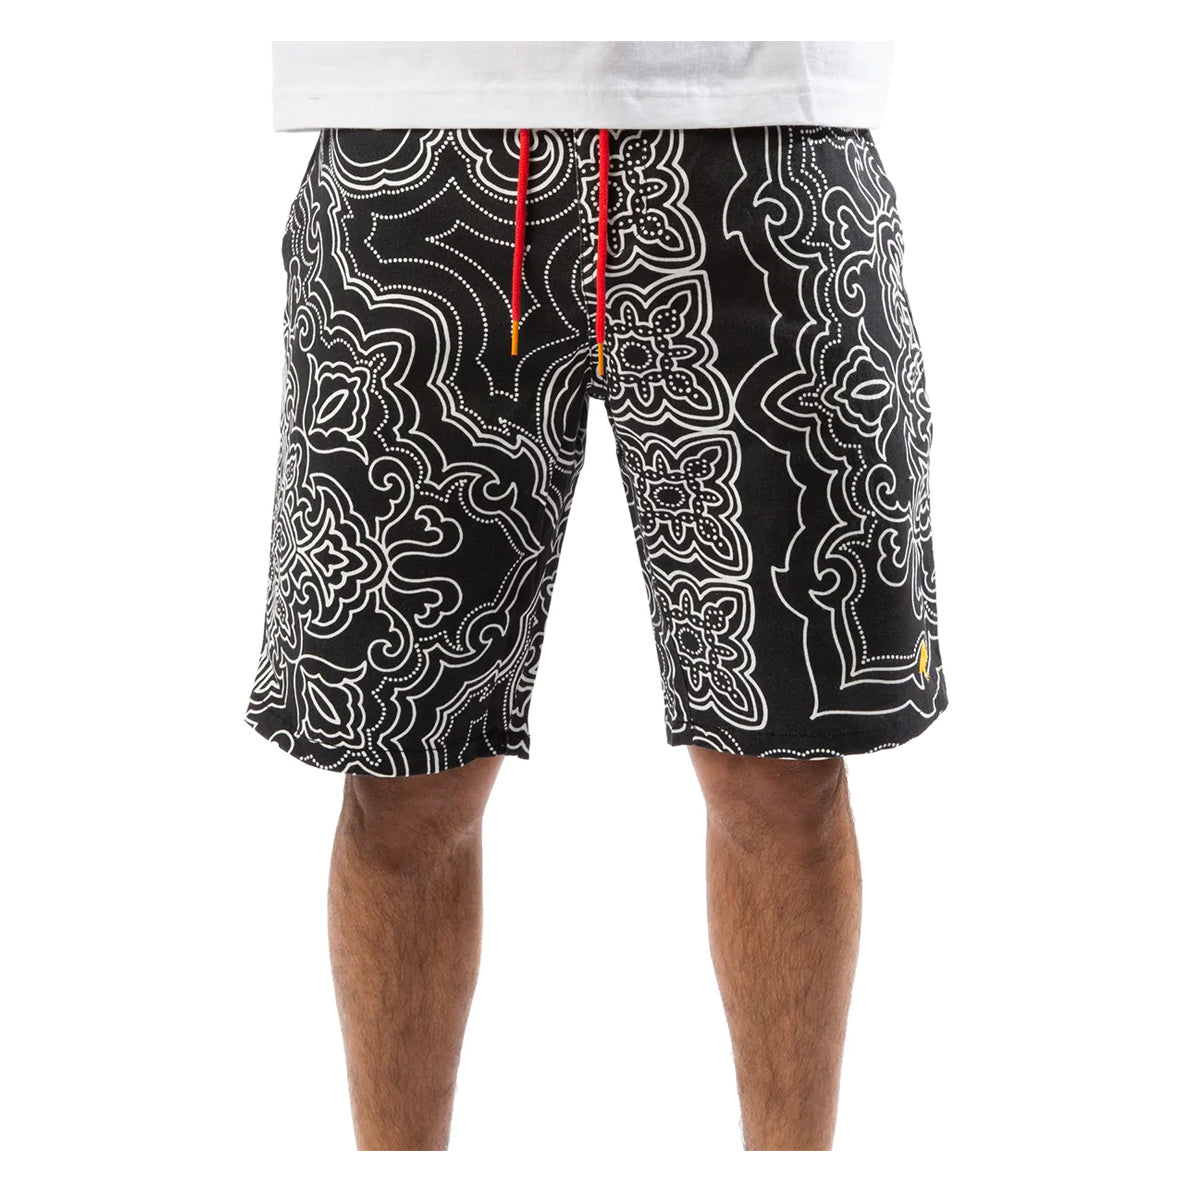 LRG Choppa It Up Men's Boardshort Shorts